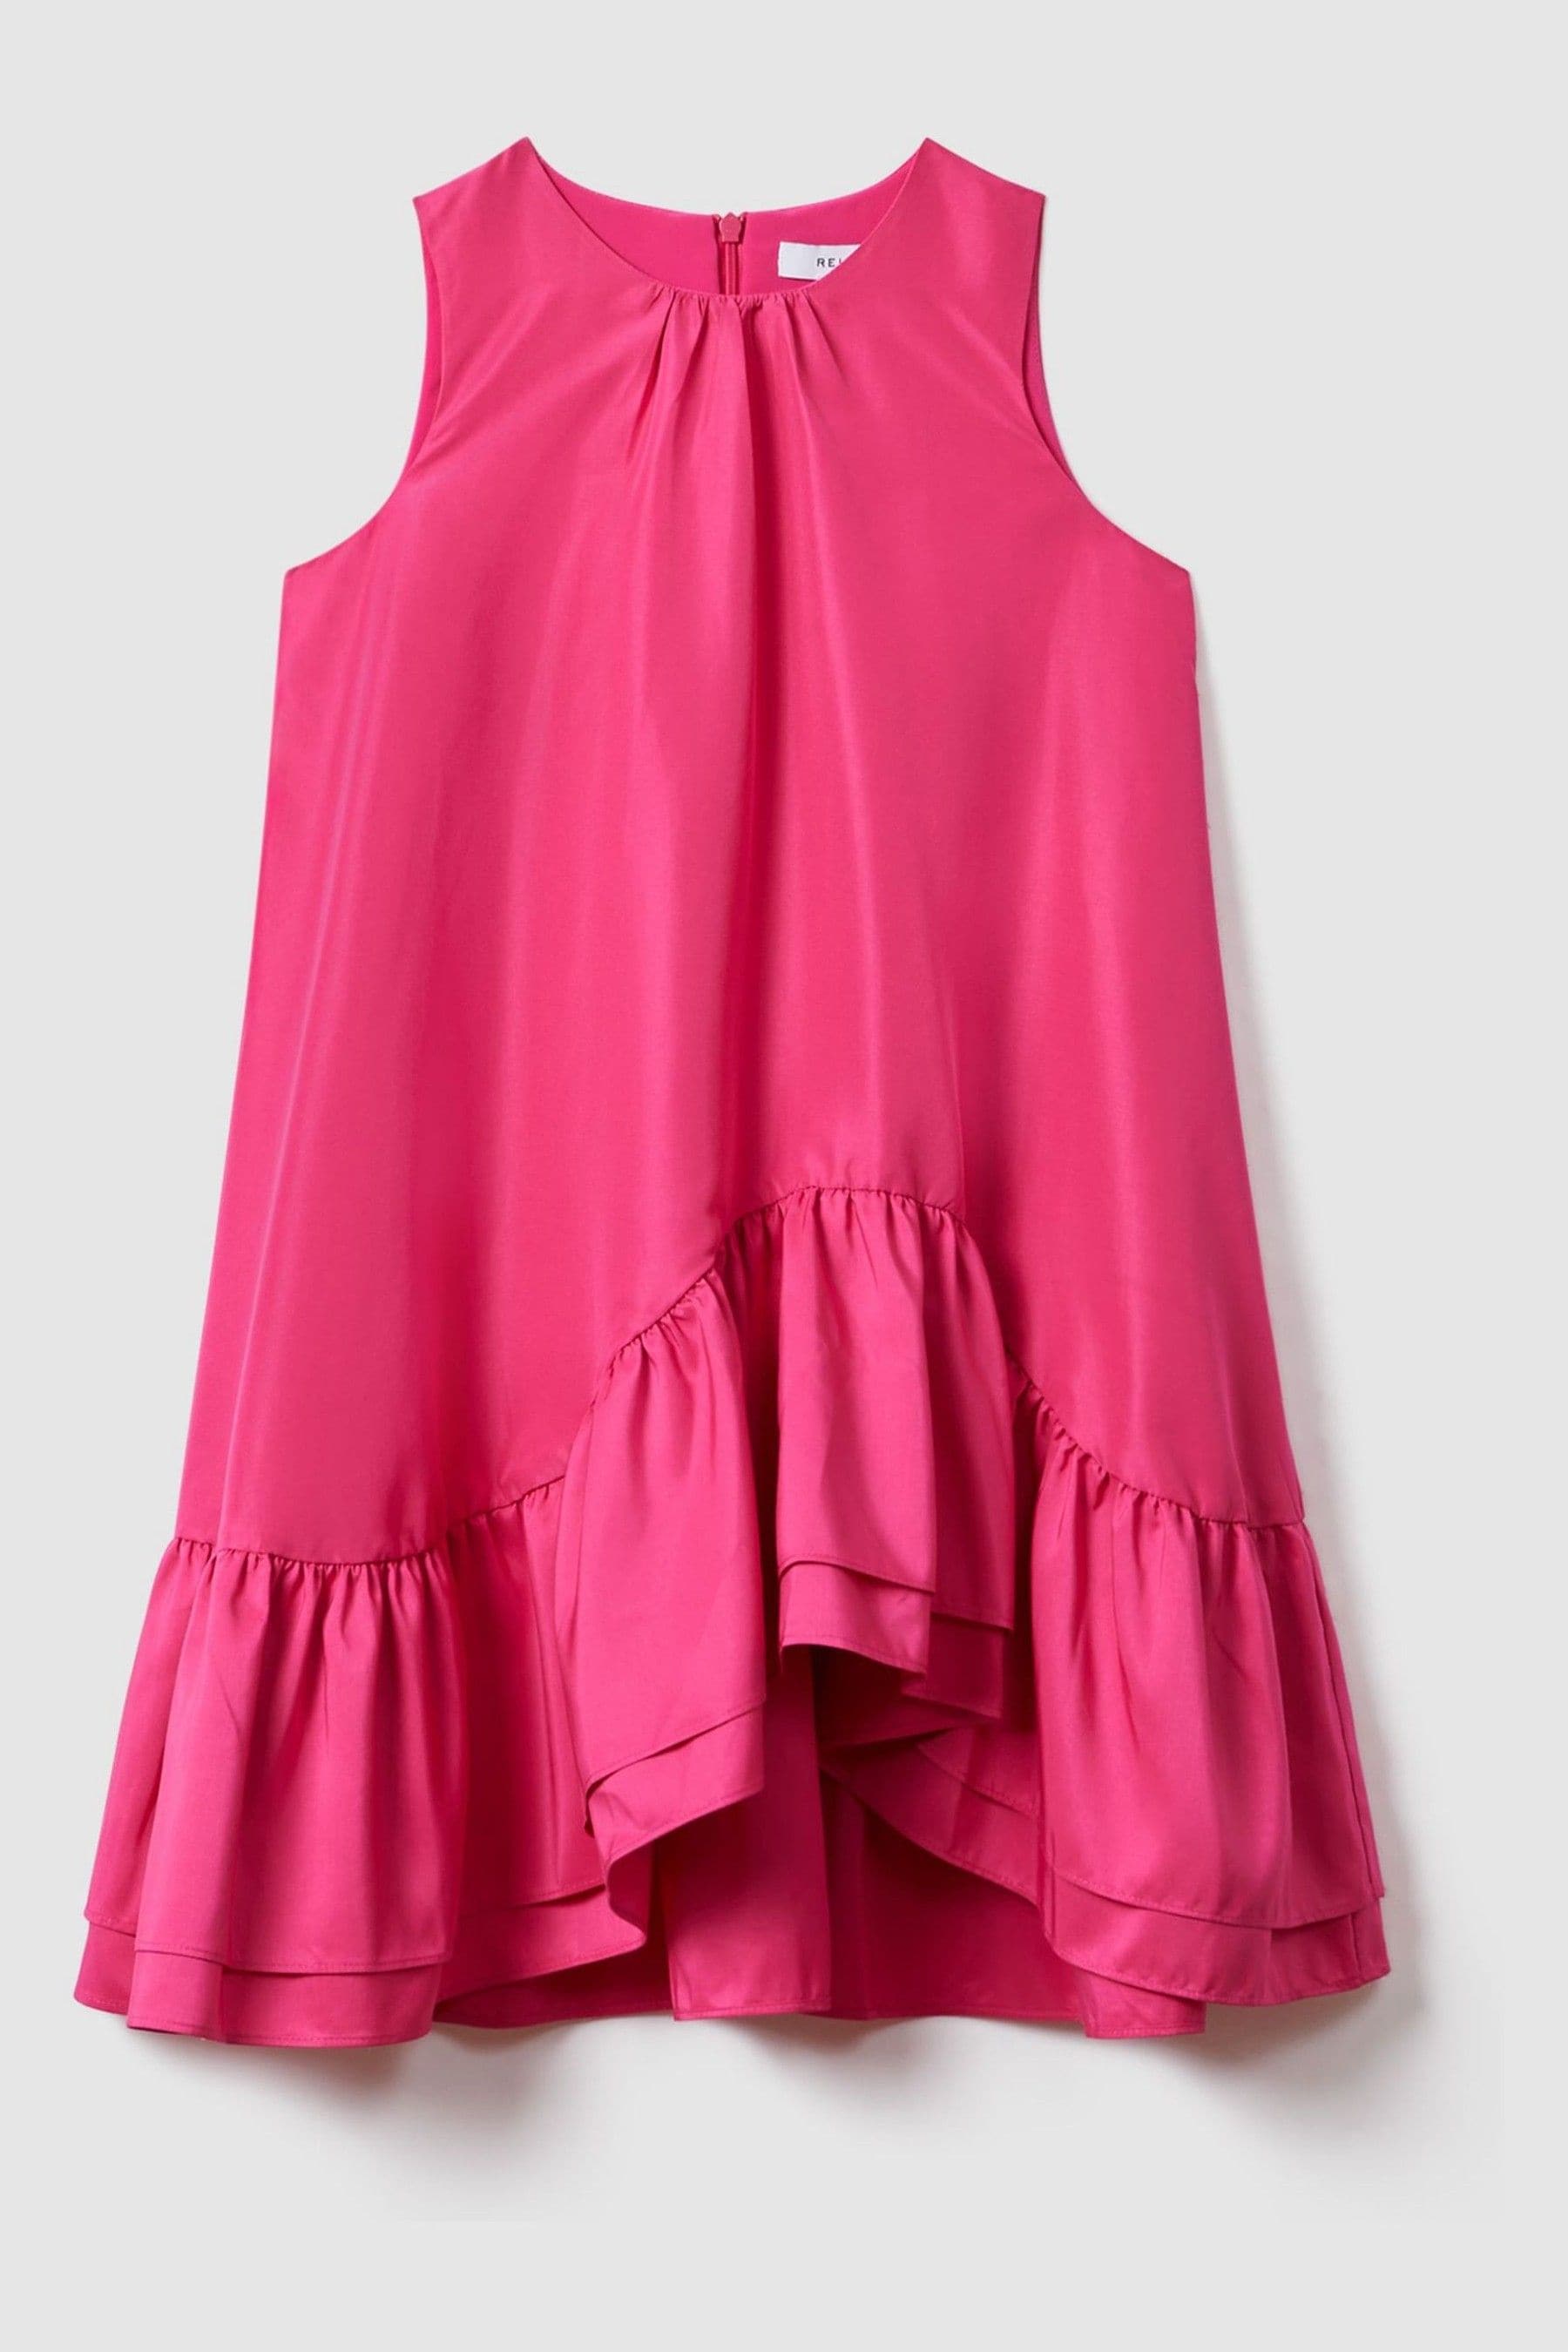 Reiss Cherie - Bright Pink Teen Layered High-low Dress, Uk 13-14 Yrs